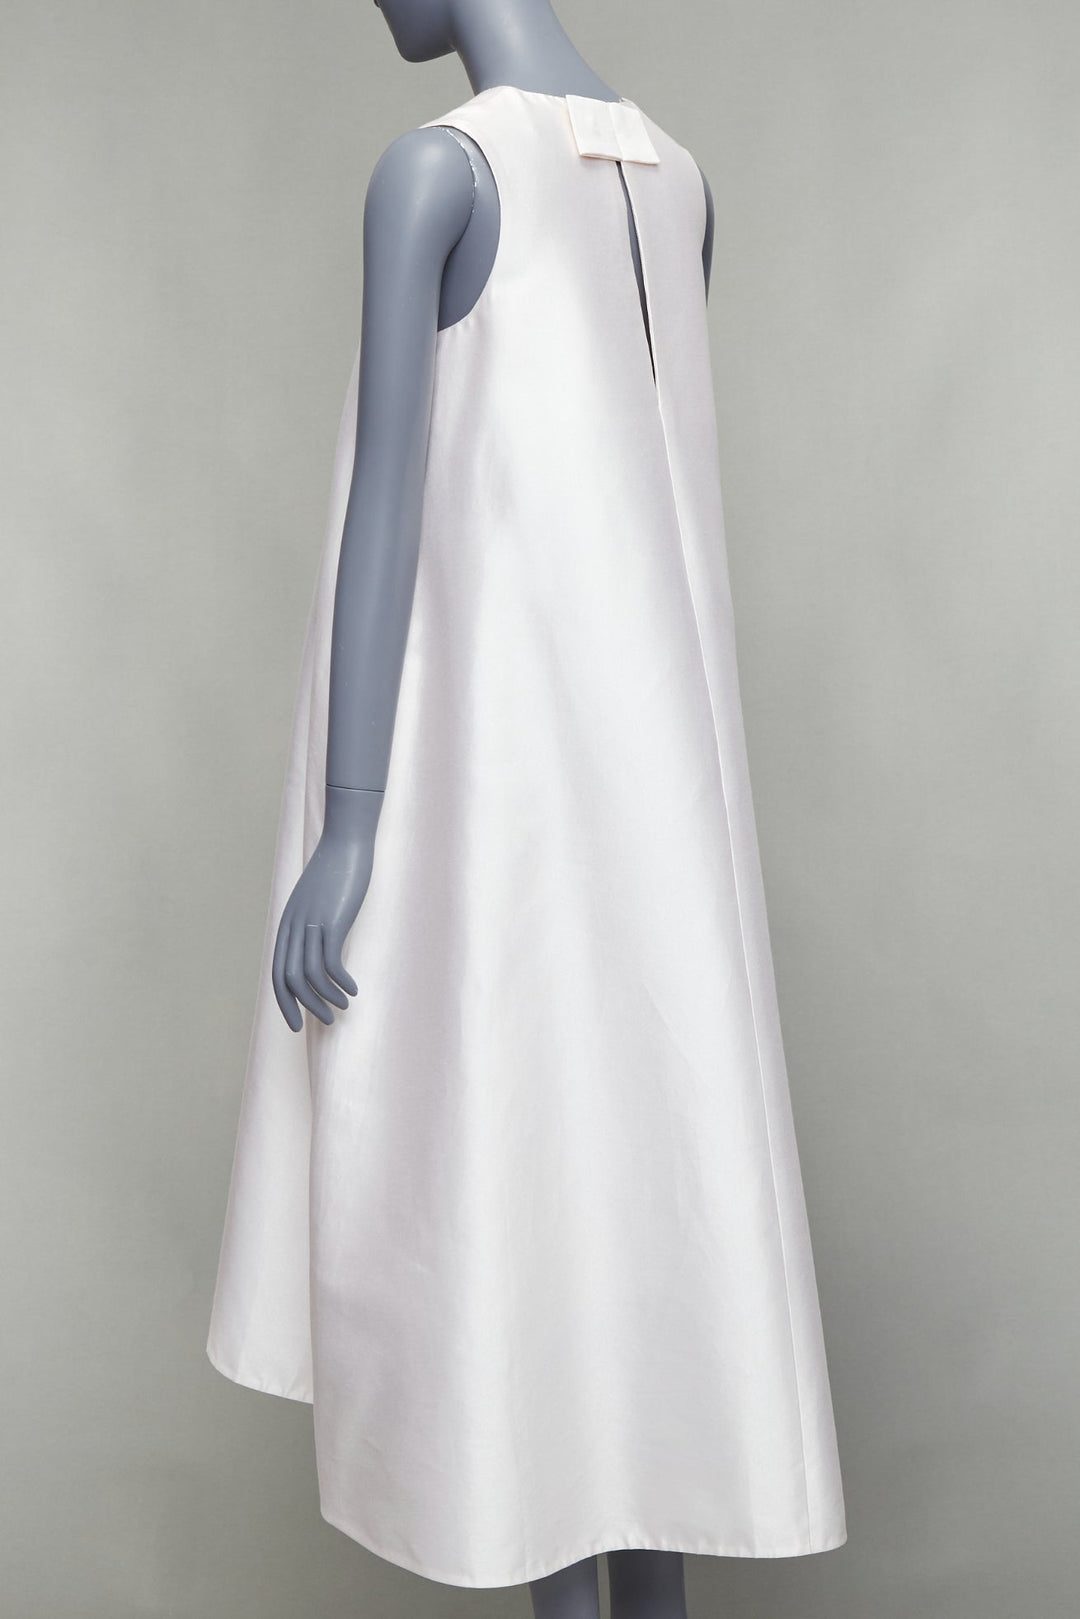 MELITTA BAUMEISTER 2019 cream silk cotton bow back midi tent dress US0 XS